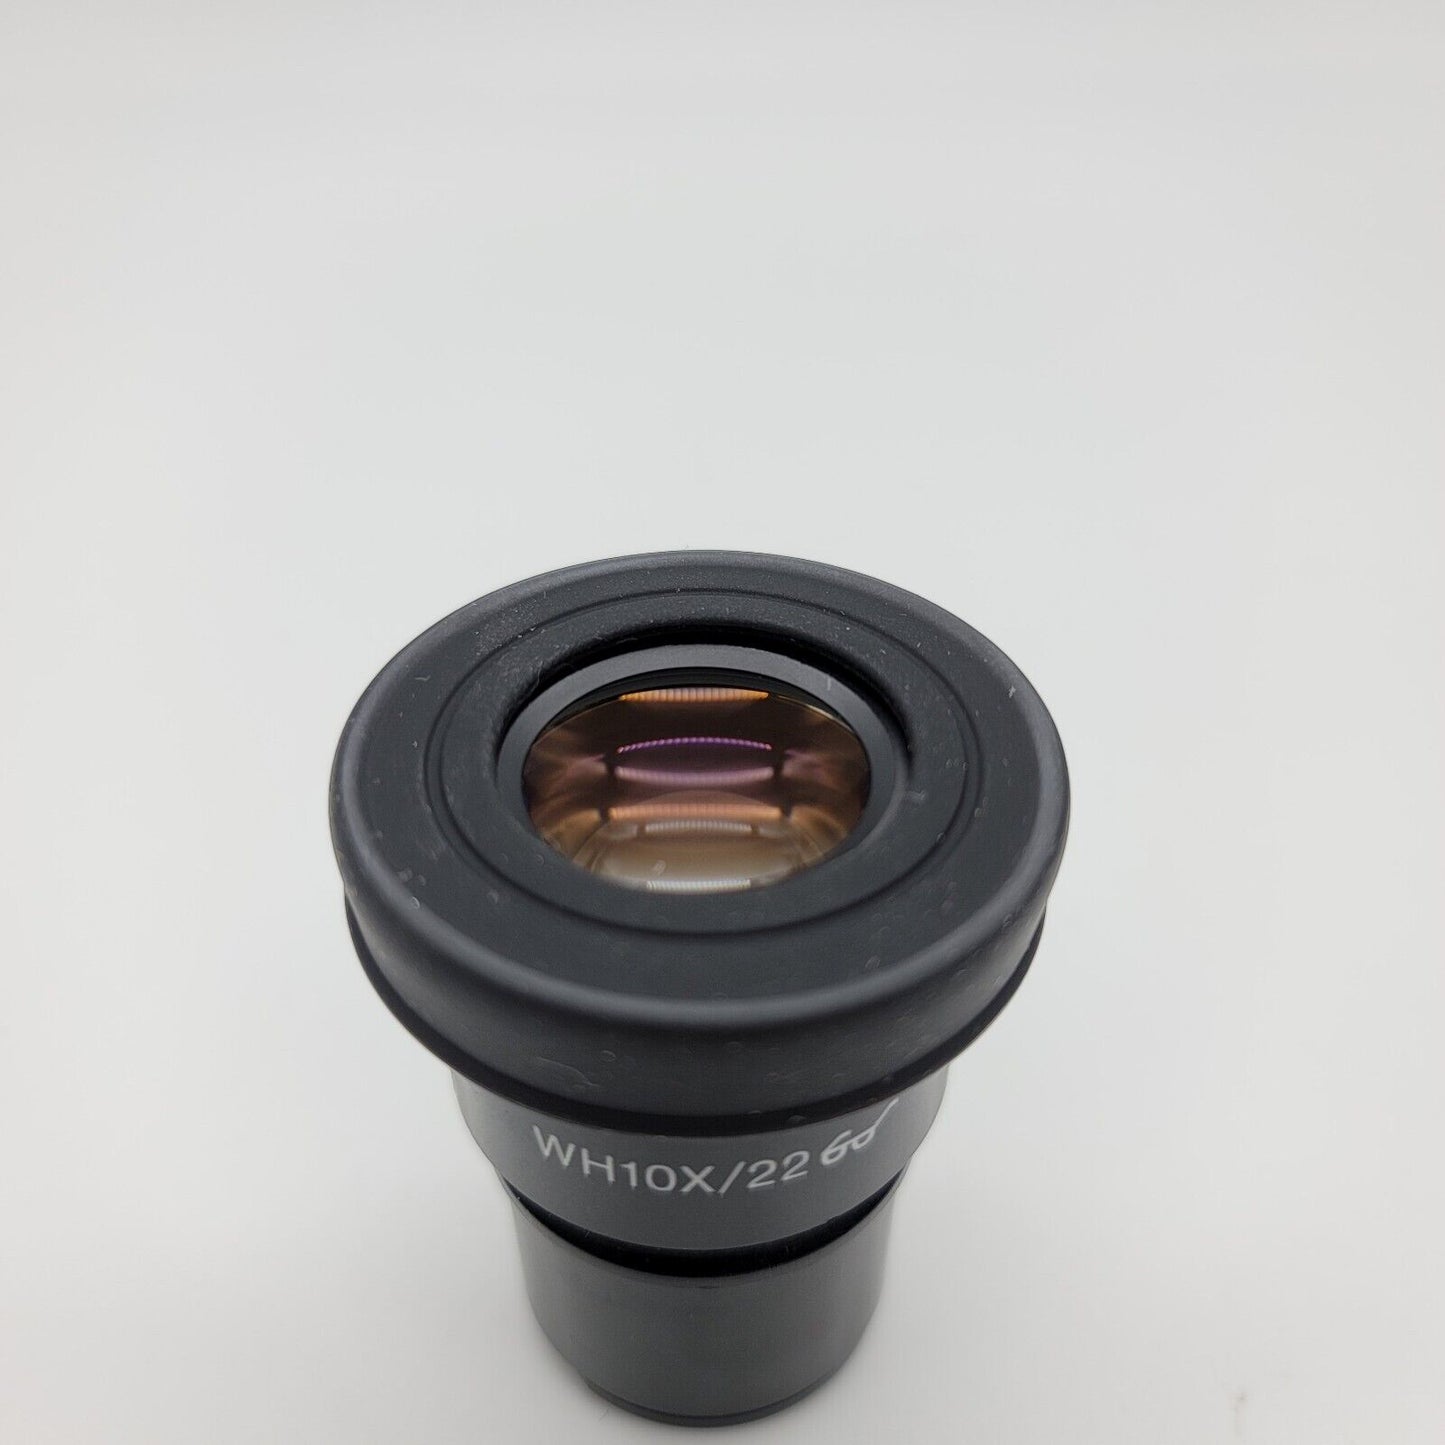 Olympus Microscope WH10X/22 T3 Eyepiece - microscopemarketplace